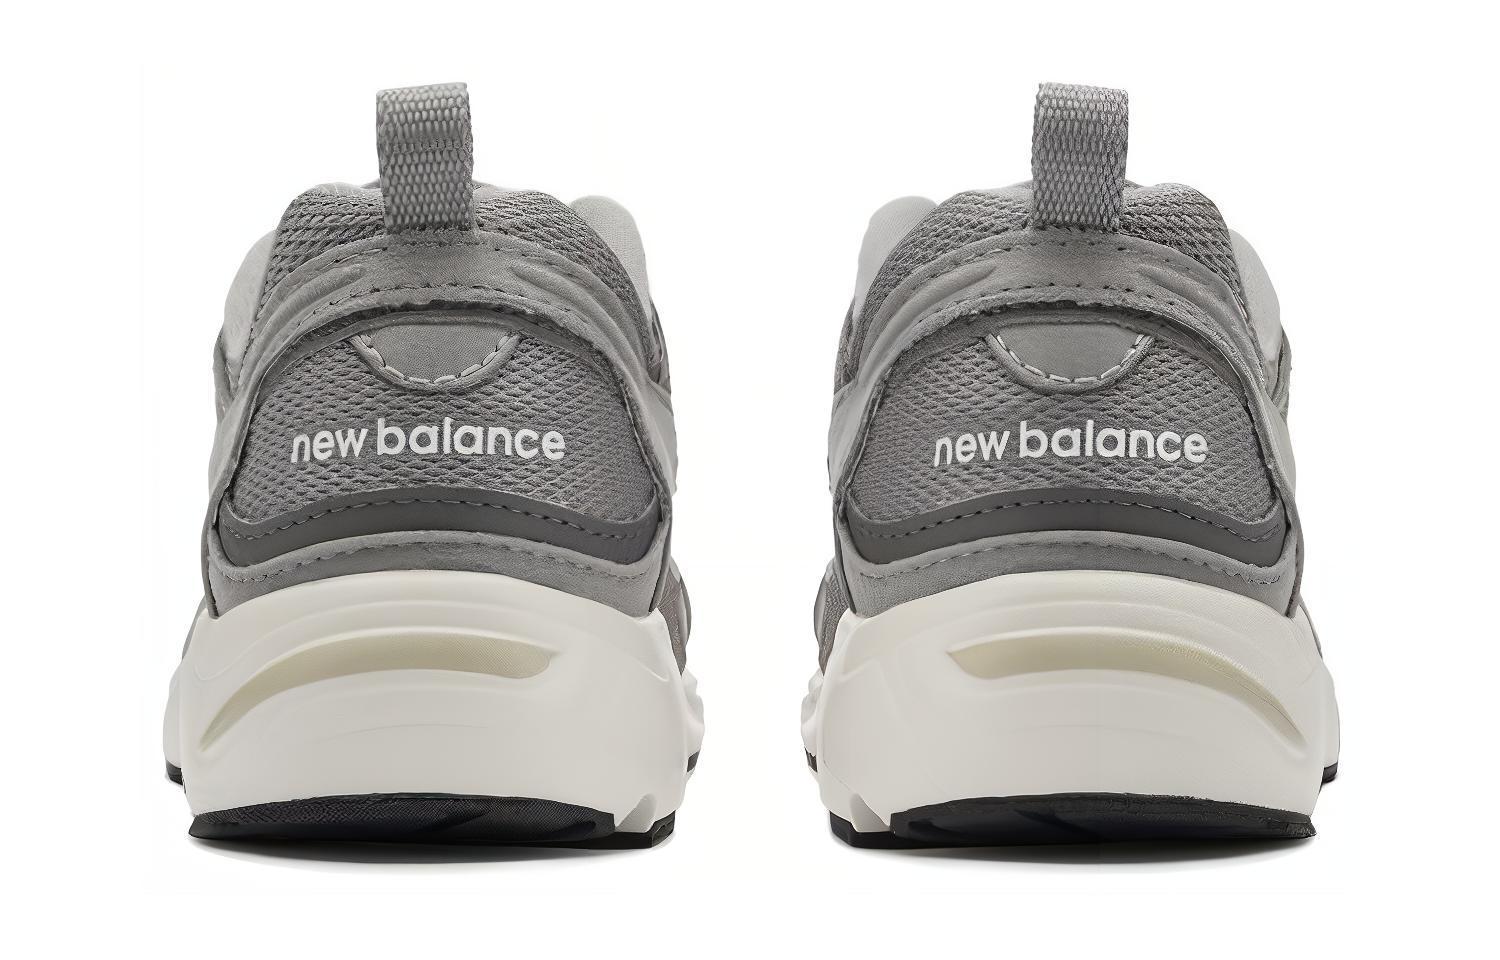 New Balance NB 878